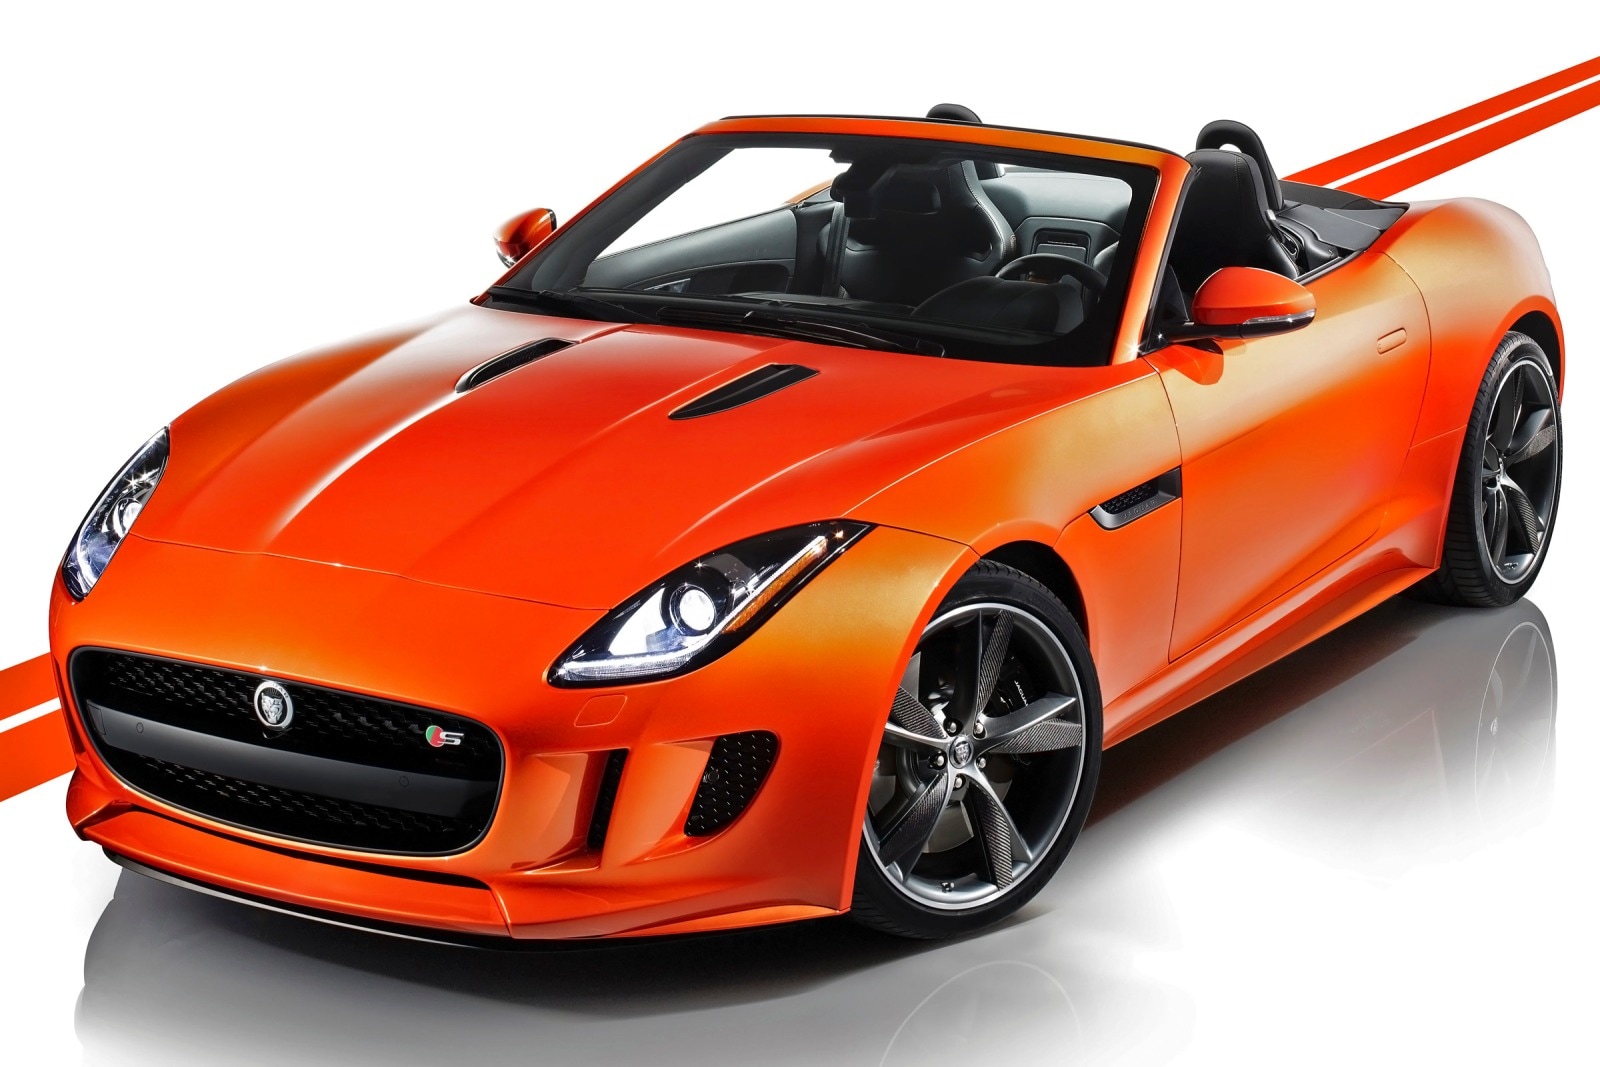 2014 Jaguar F-TYPE Review & Ratings | Edmunds